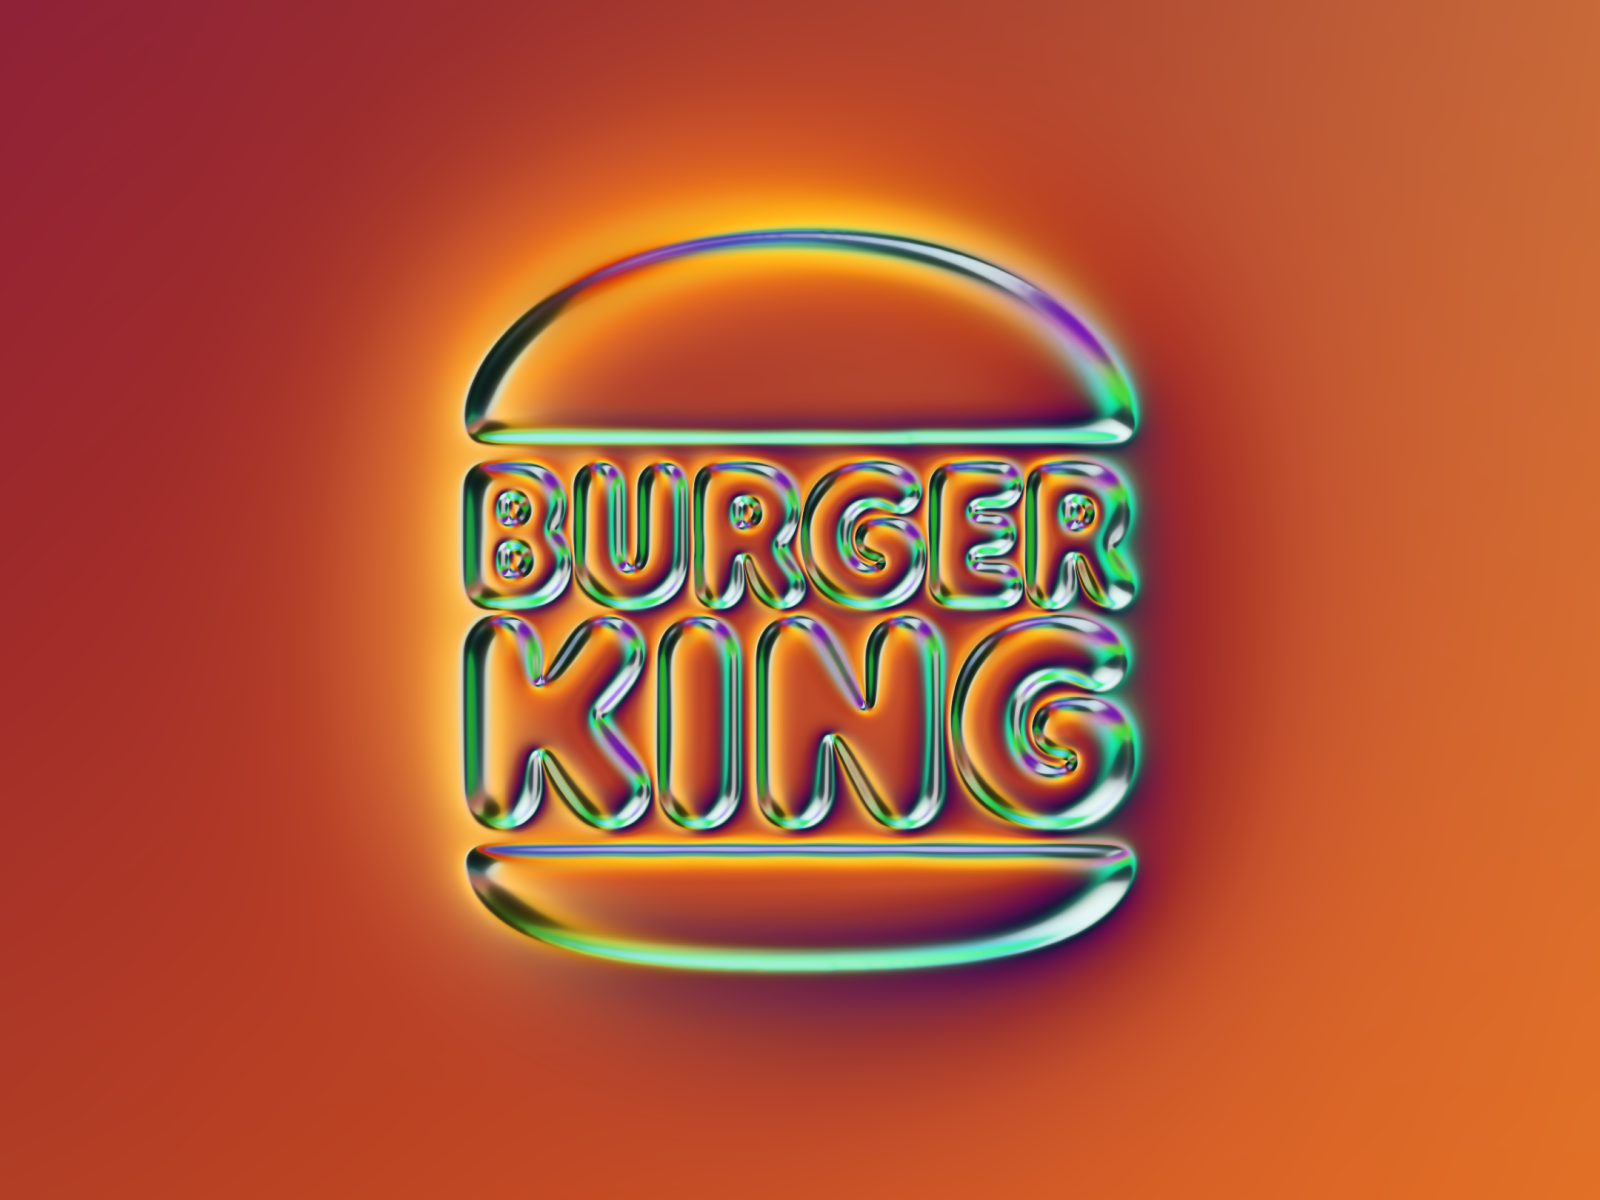 Burger king transparent png, Burger king free png 19909493 PNG